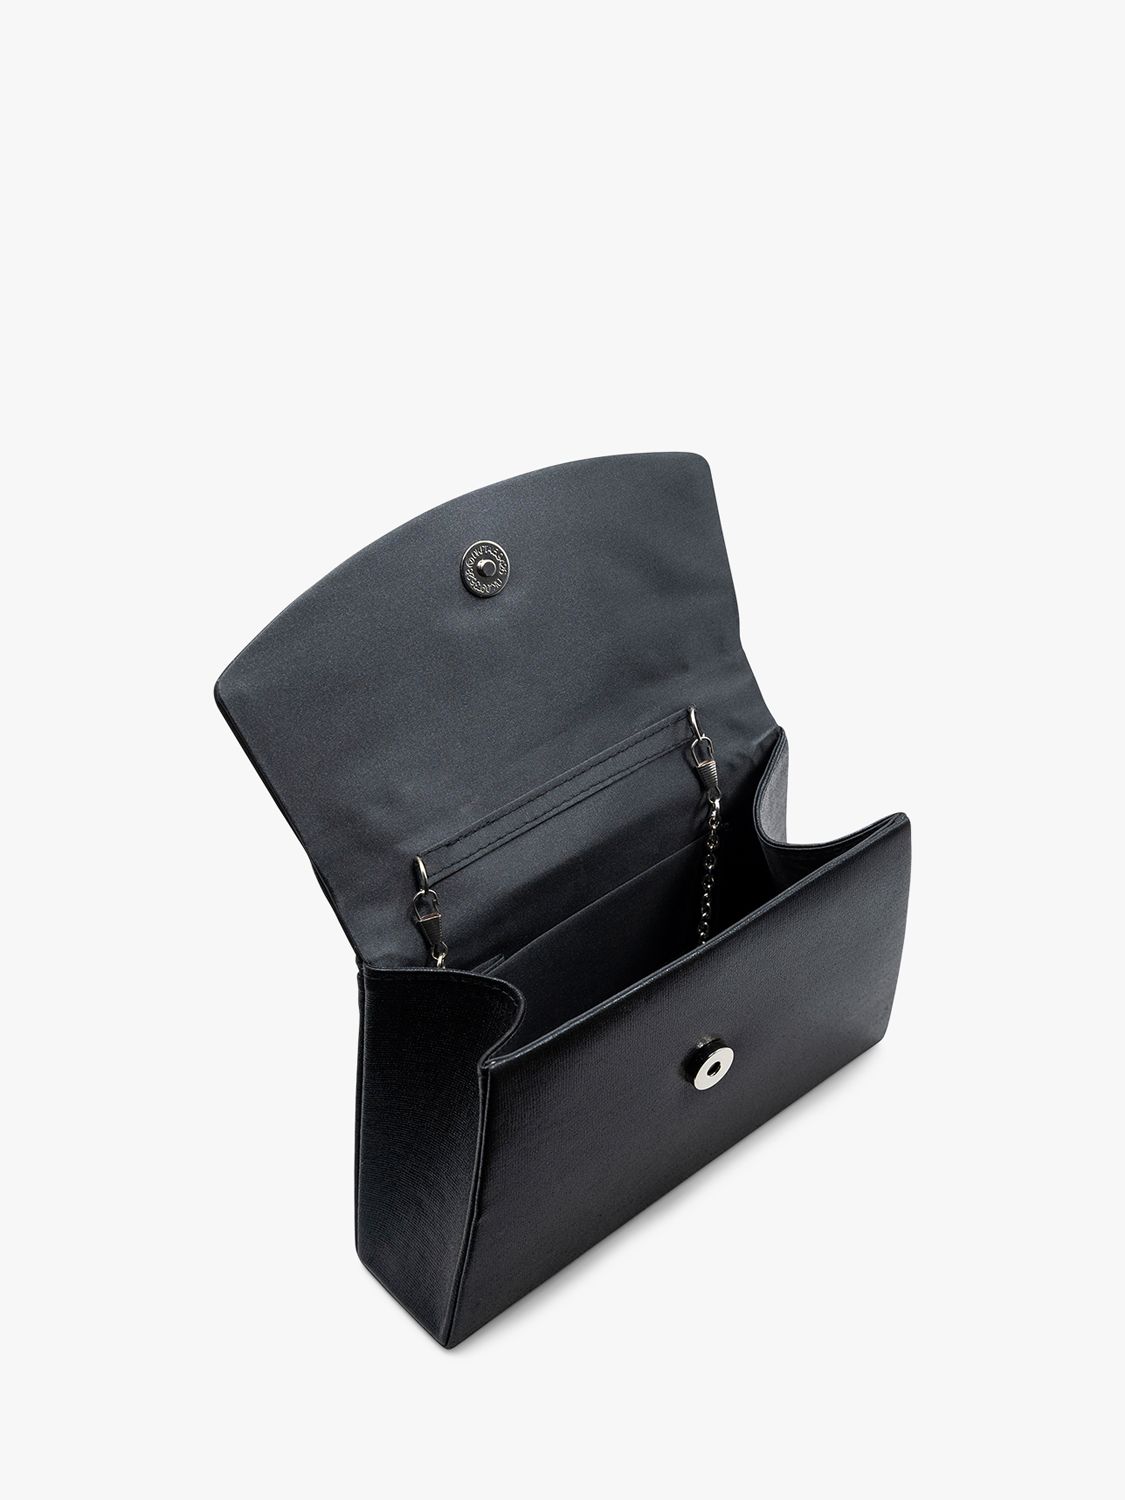 Paradox London Damelza Shimmer Top Bag, Black at John Lewis & Partners